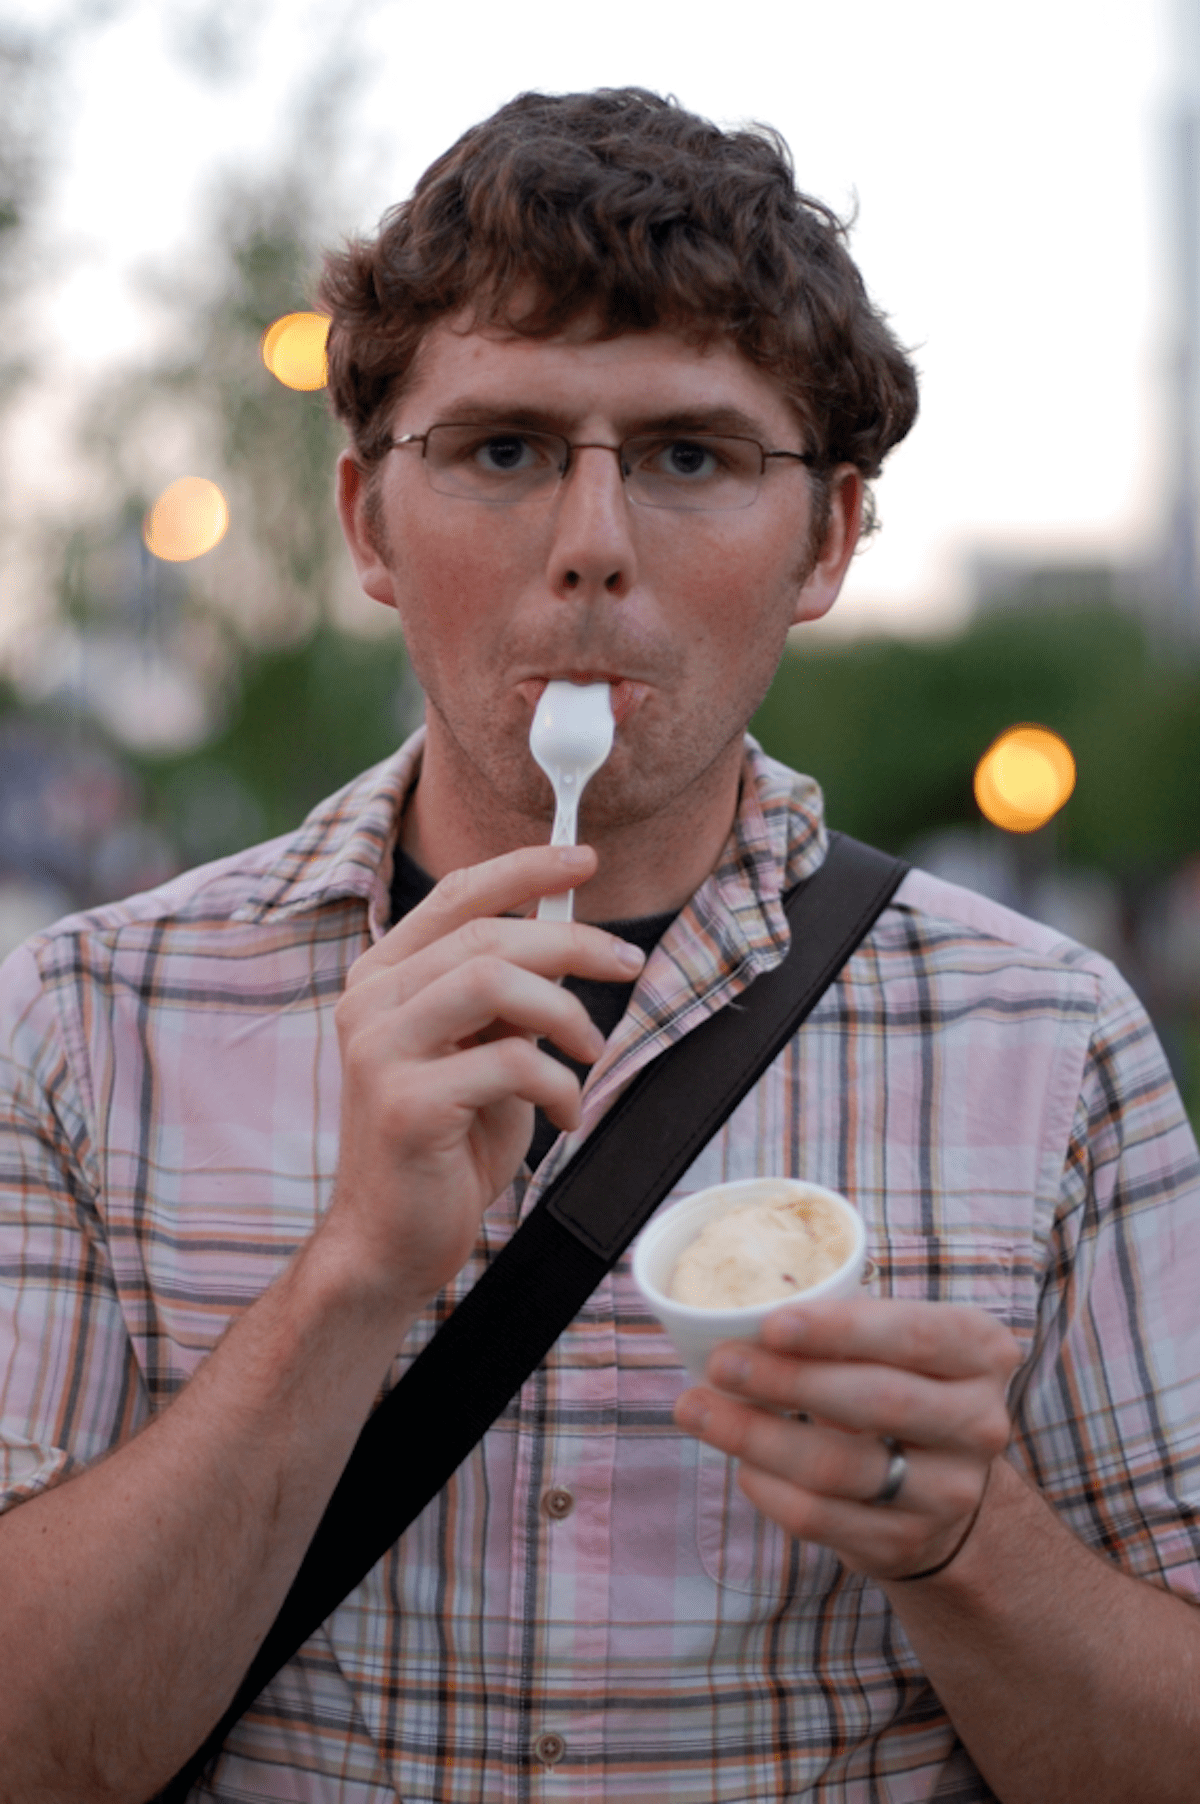 Man eating ice cream.